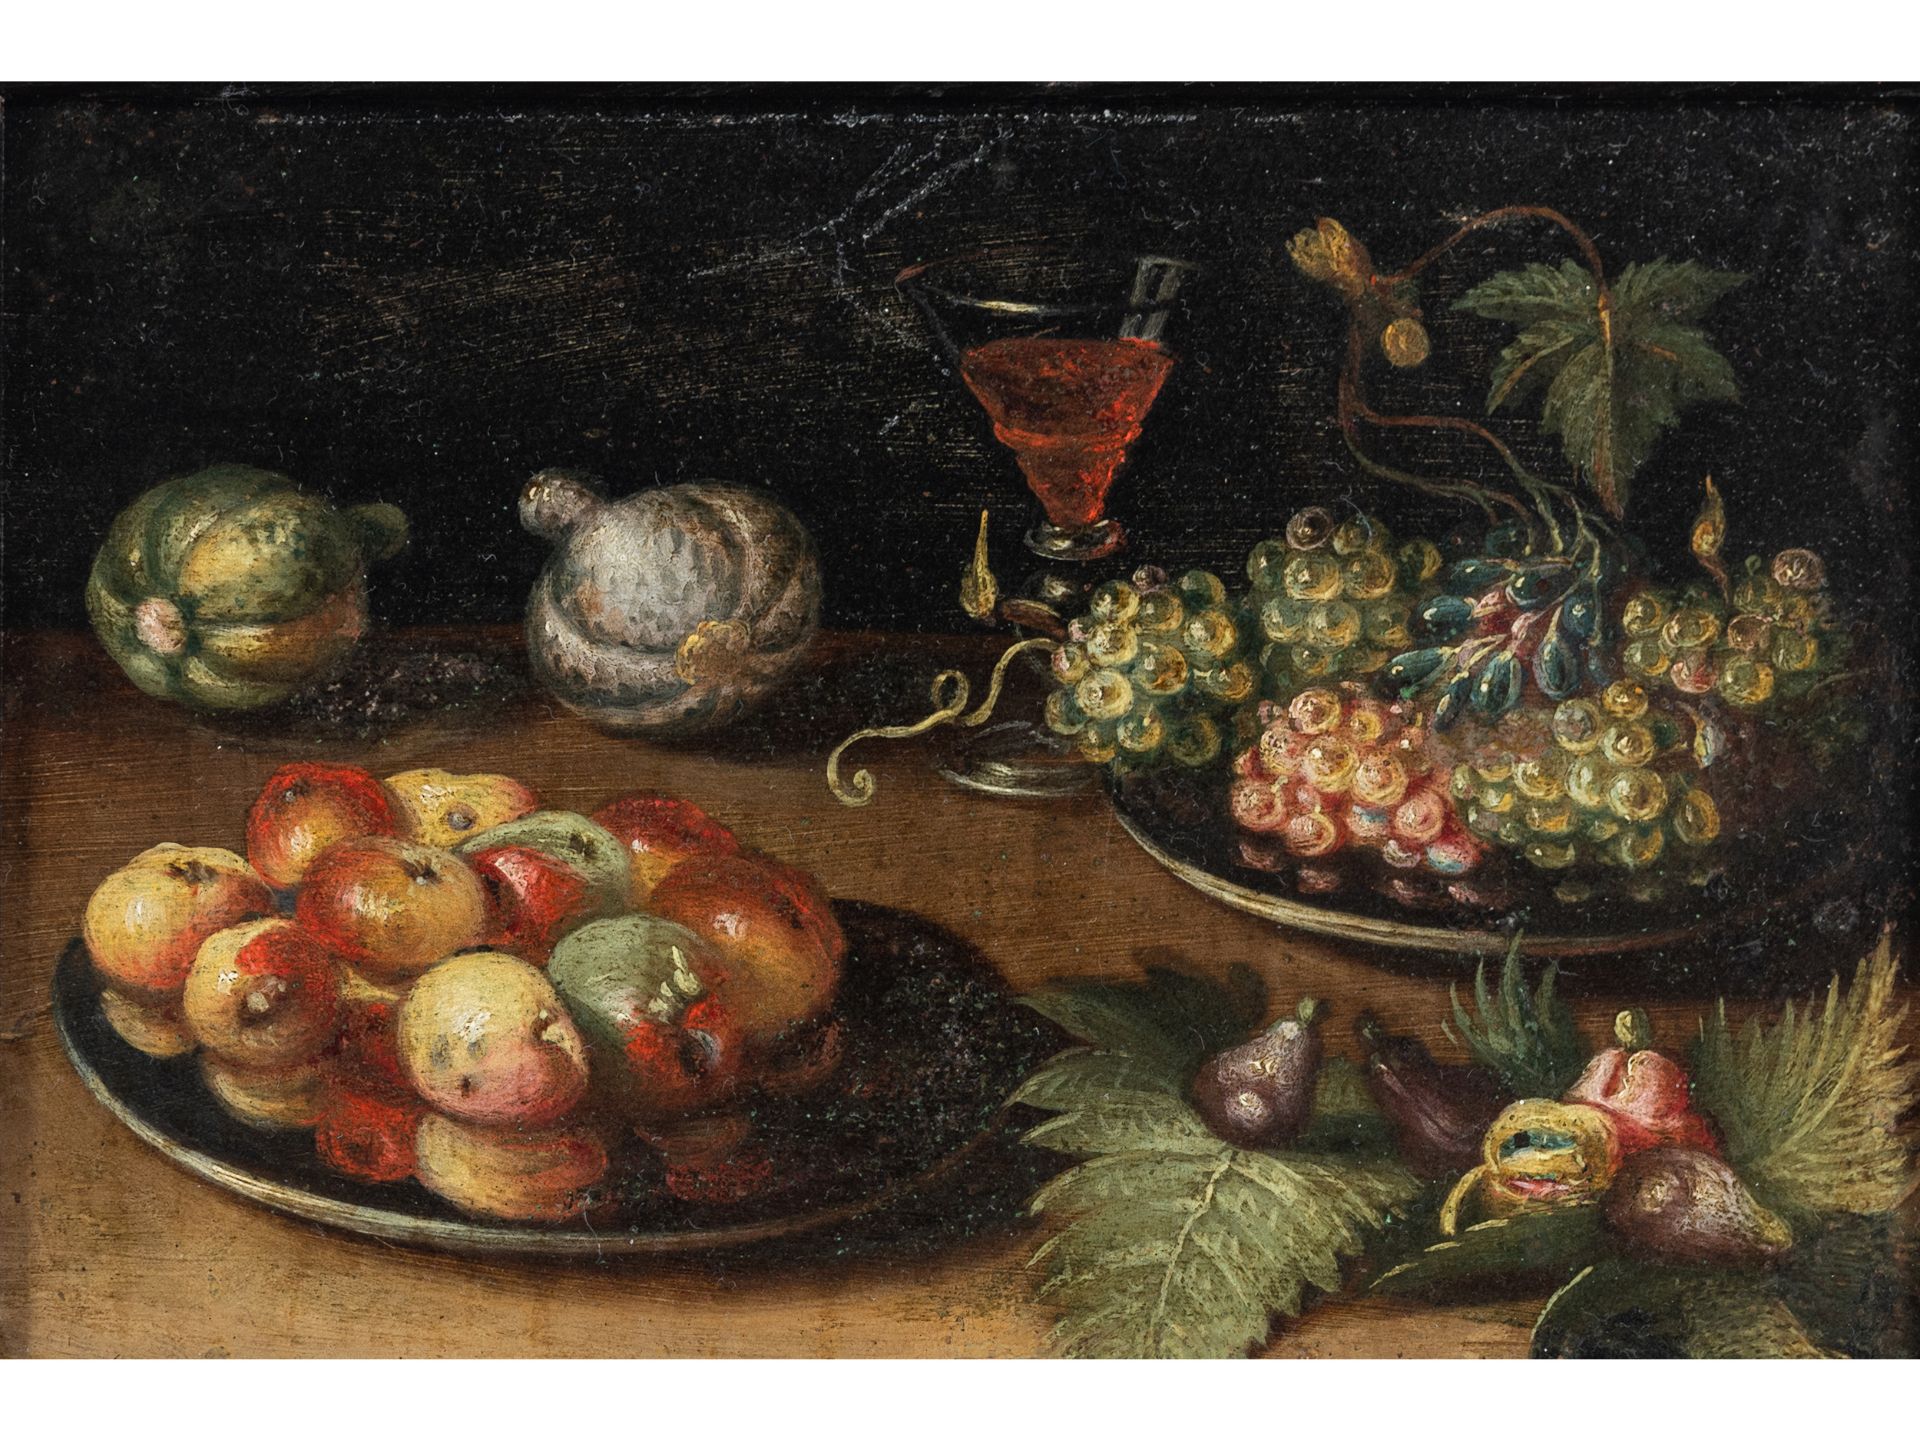 Osias Beert, Antwerp 1580 - 1624 Antwerp, Circle of, Still life